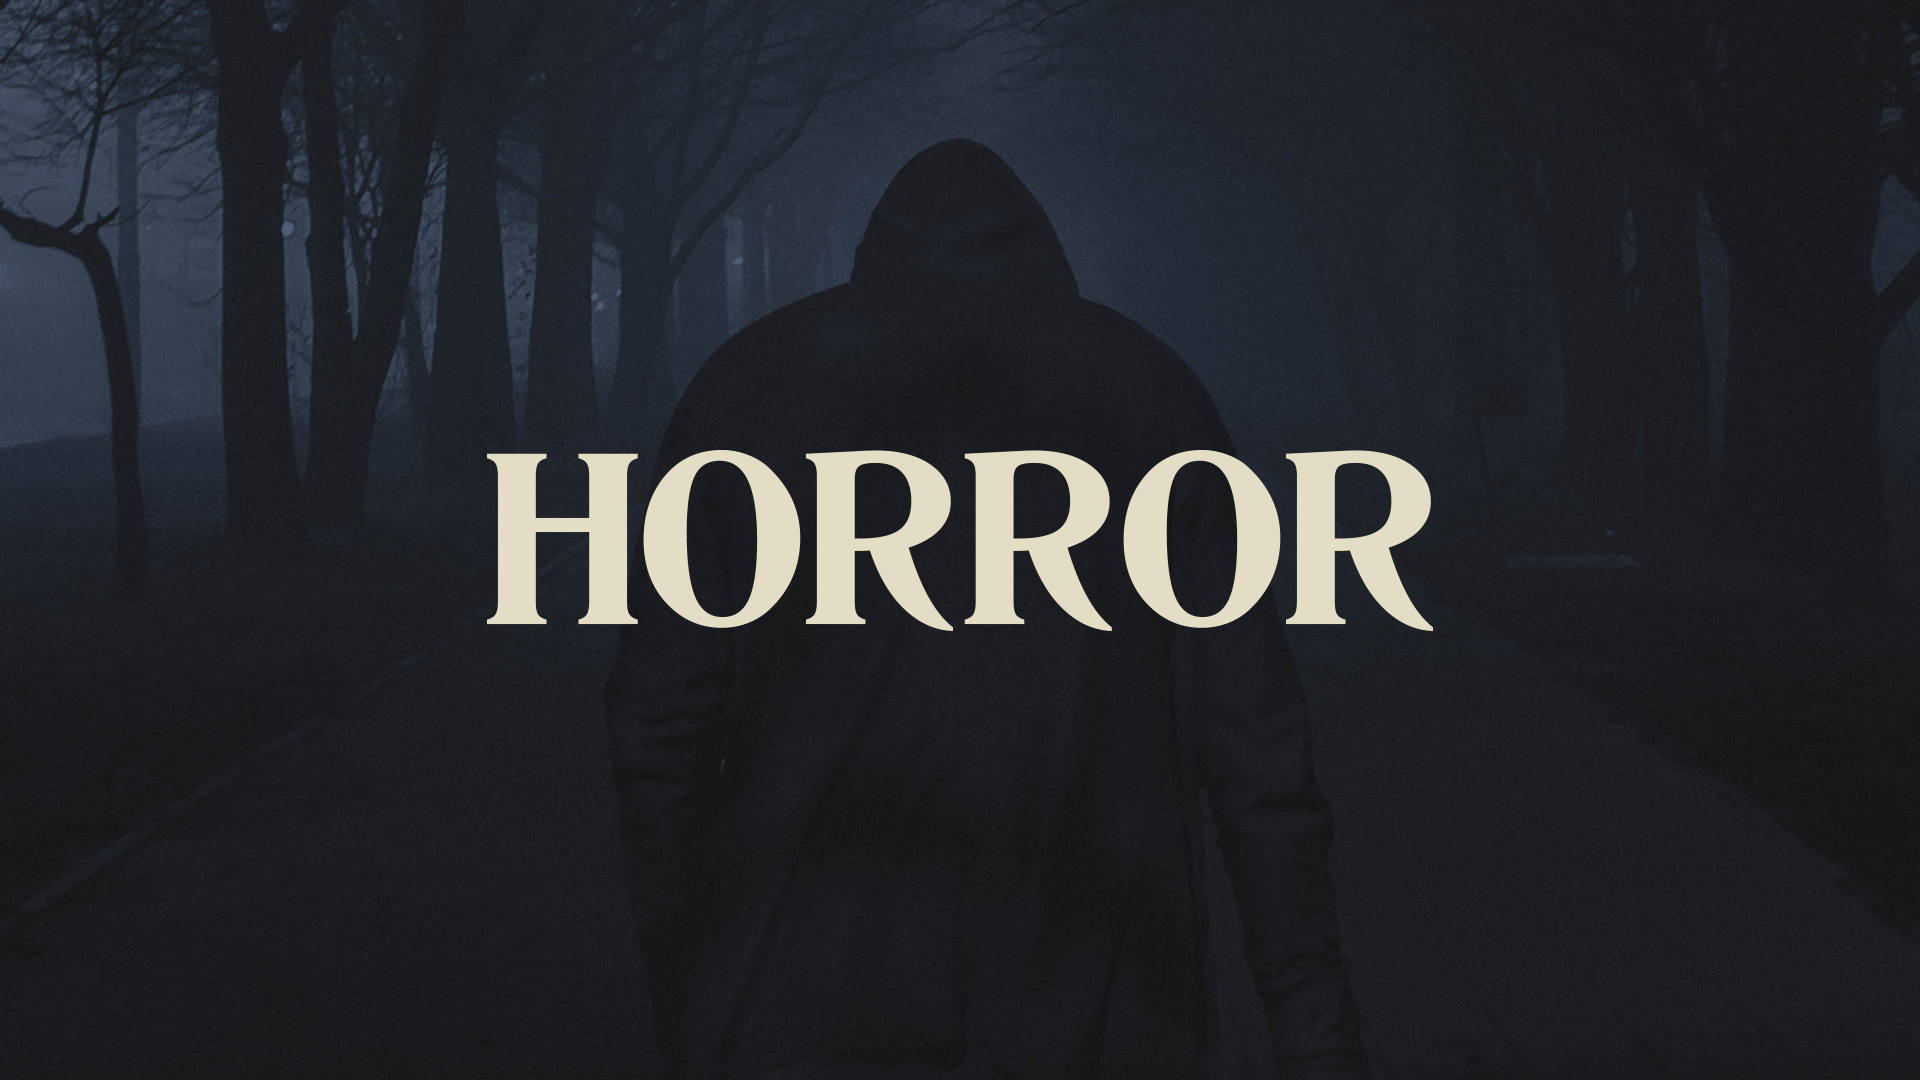 Steam Workshop Garry S Mod Horror Map Collection